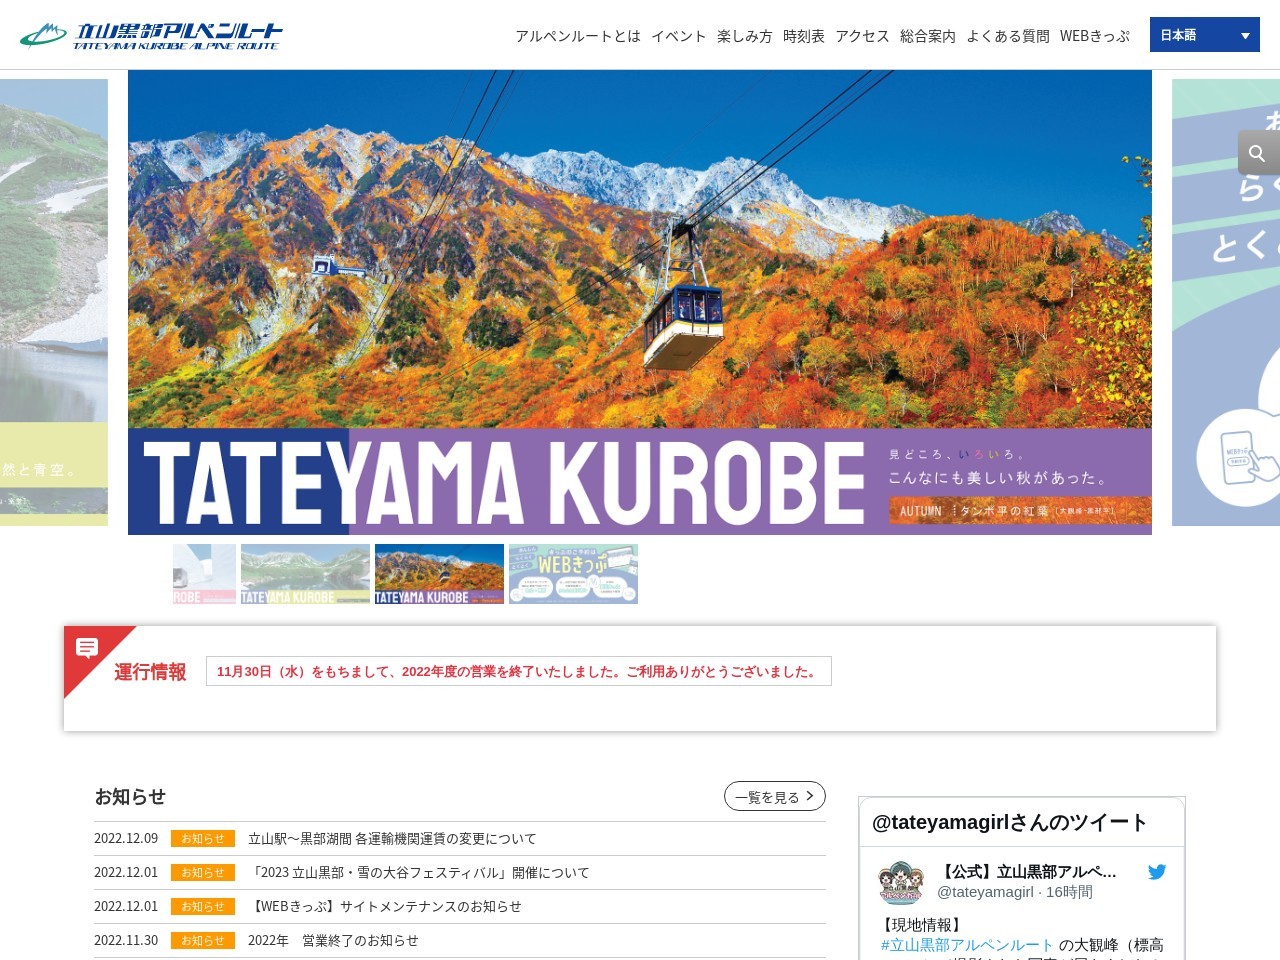 Tateyama Kurobe Alpine Routeのクチコミ・評判とホームページ